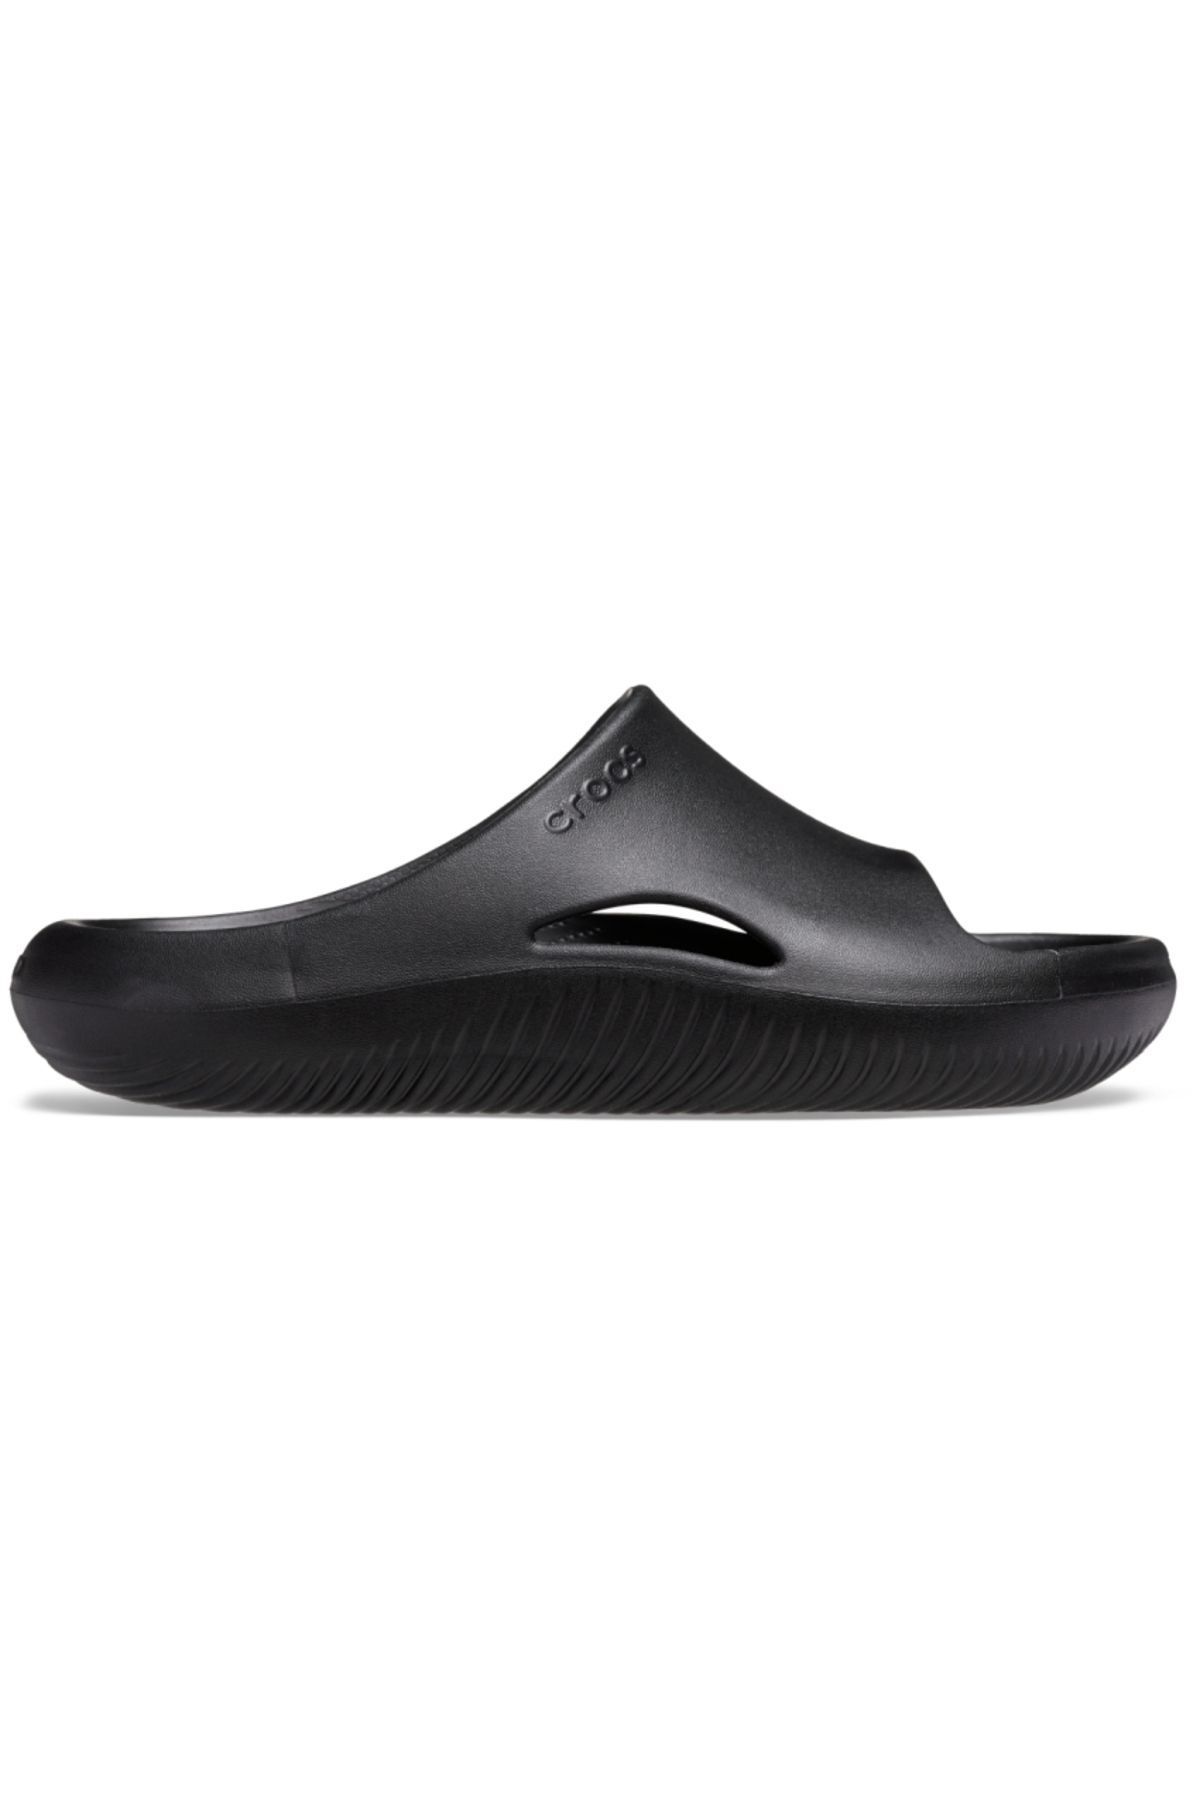 Crocs Mellow Slide Black Siyah Erkek Spor Terlik 208392-001